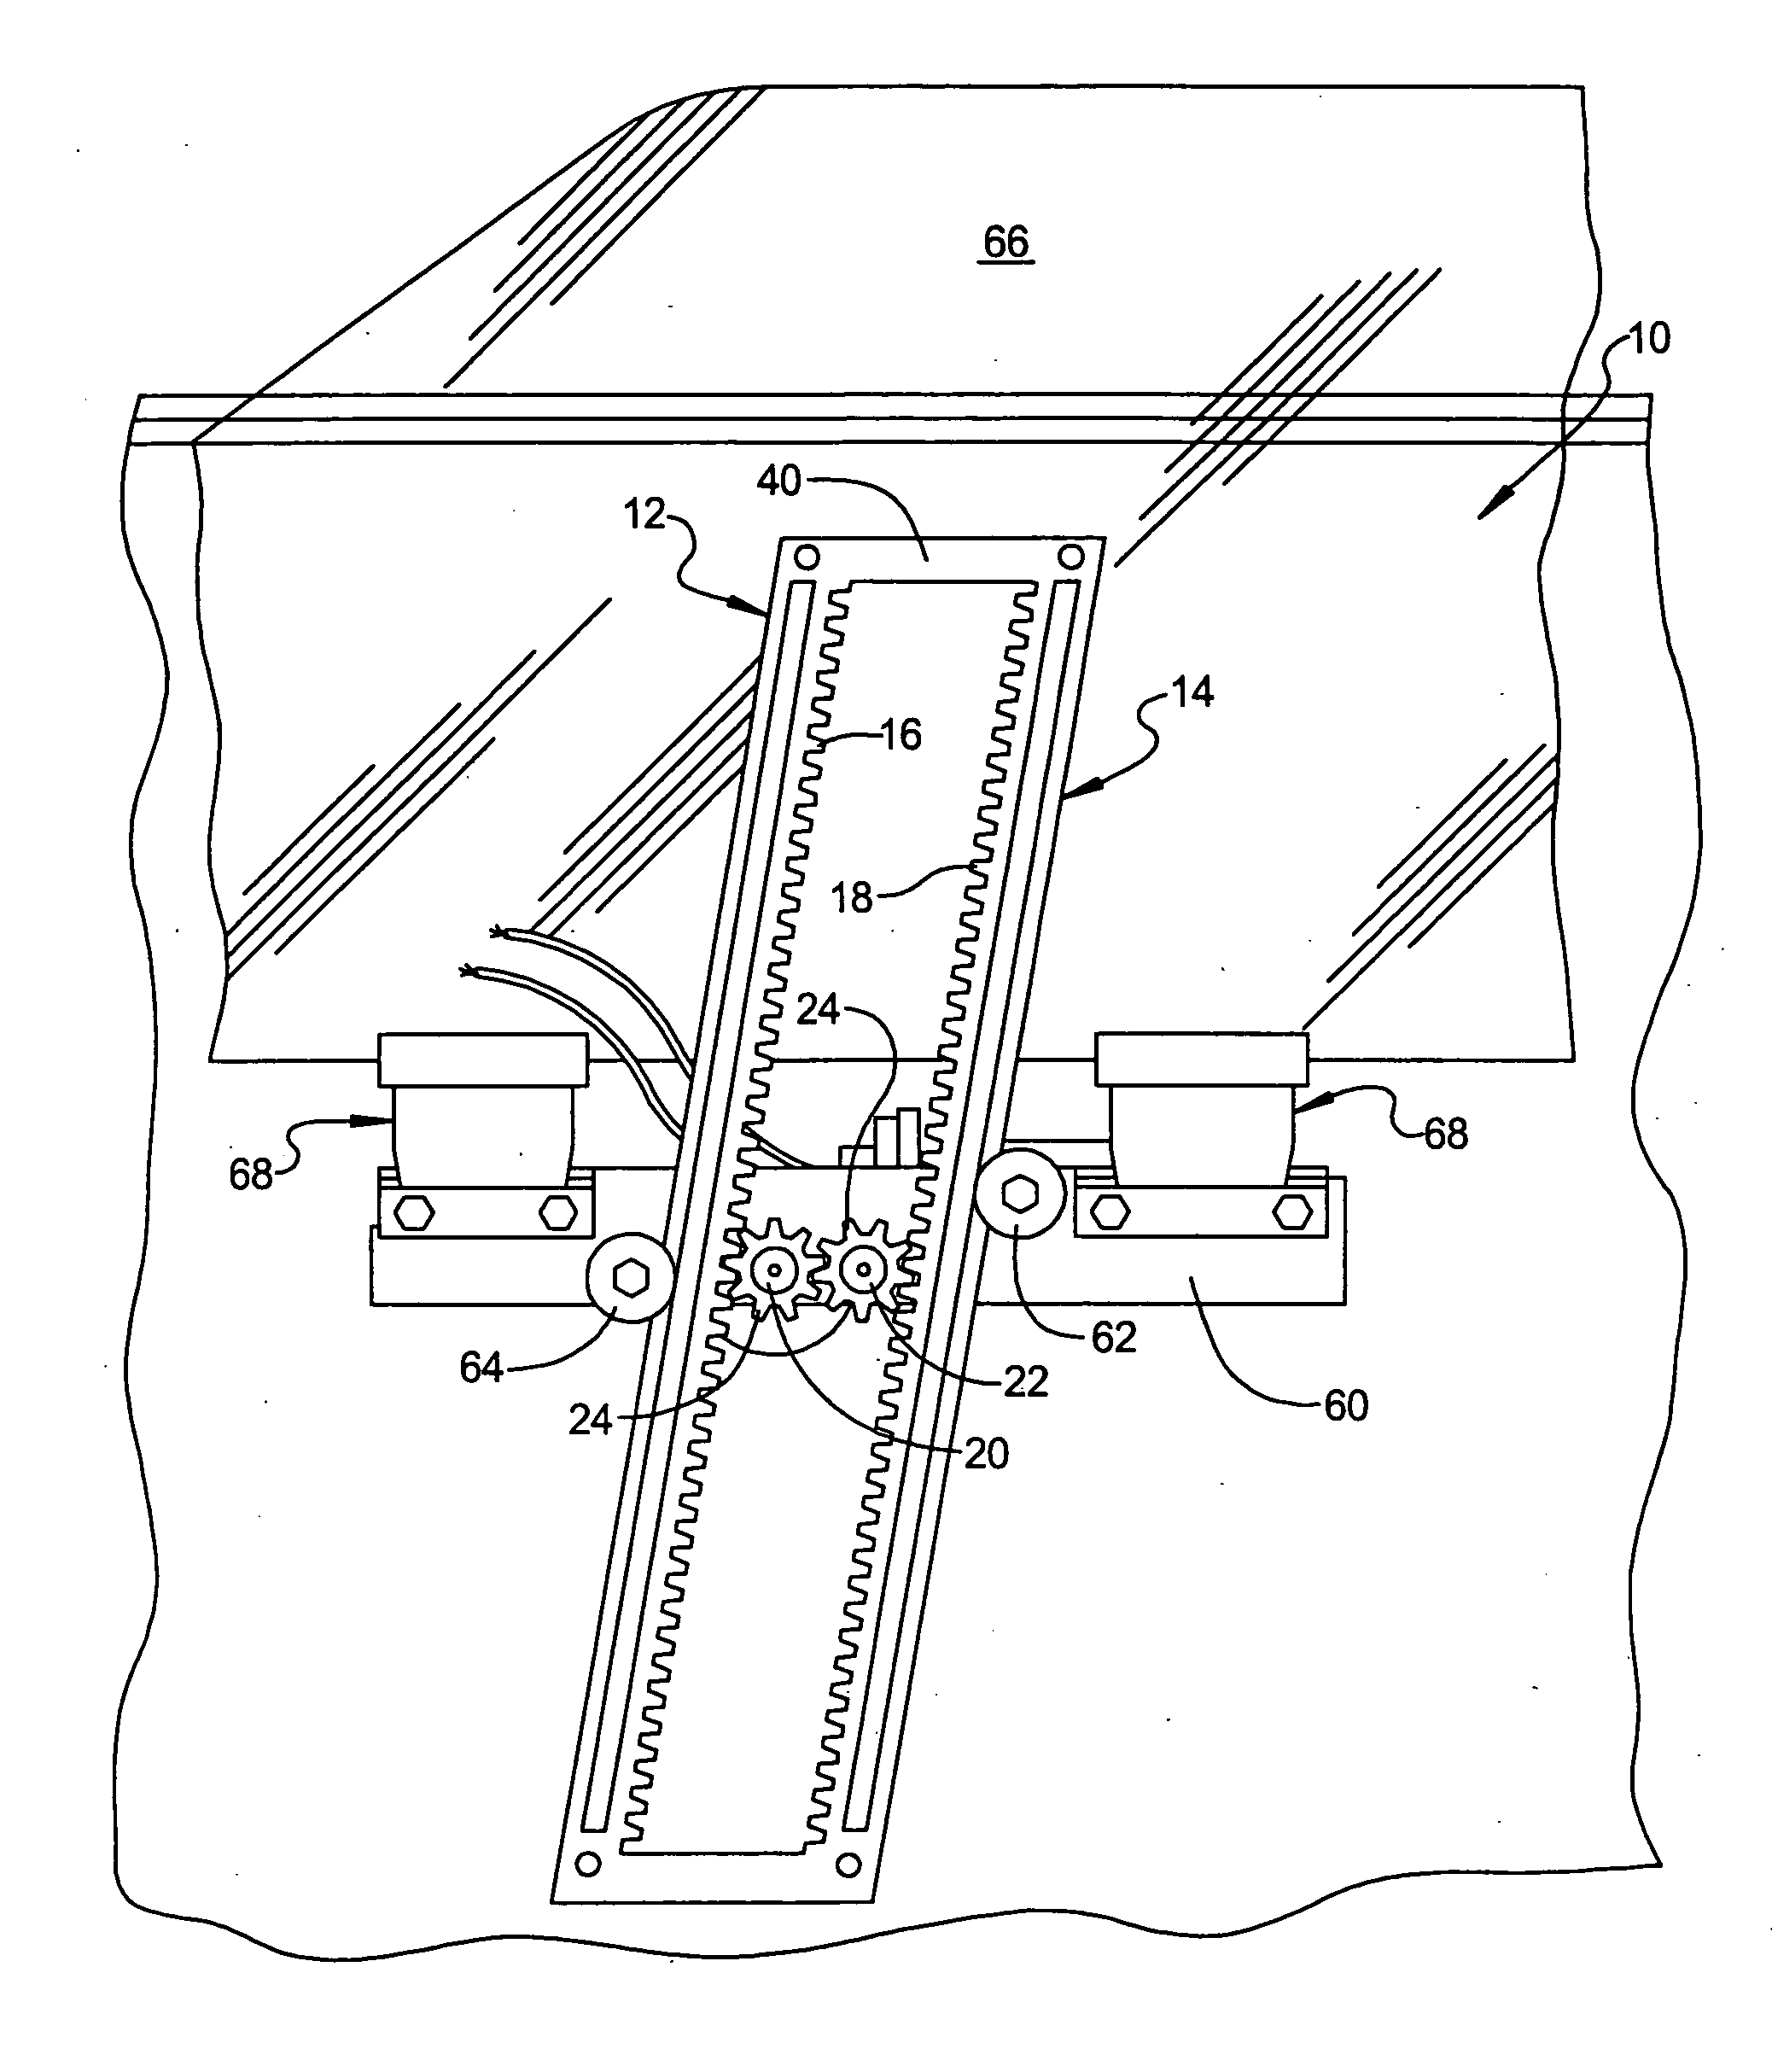 Window lift mechanism